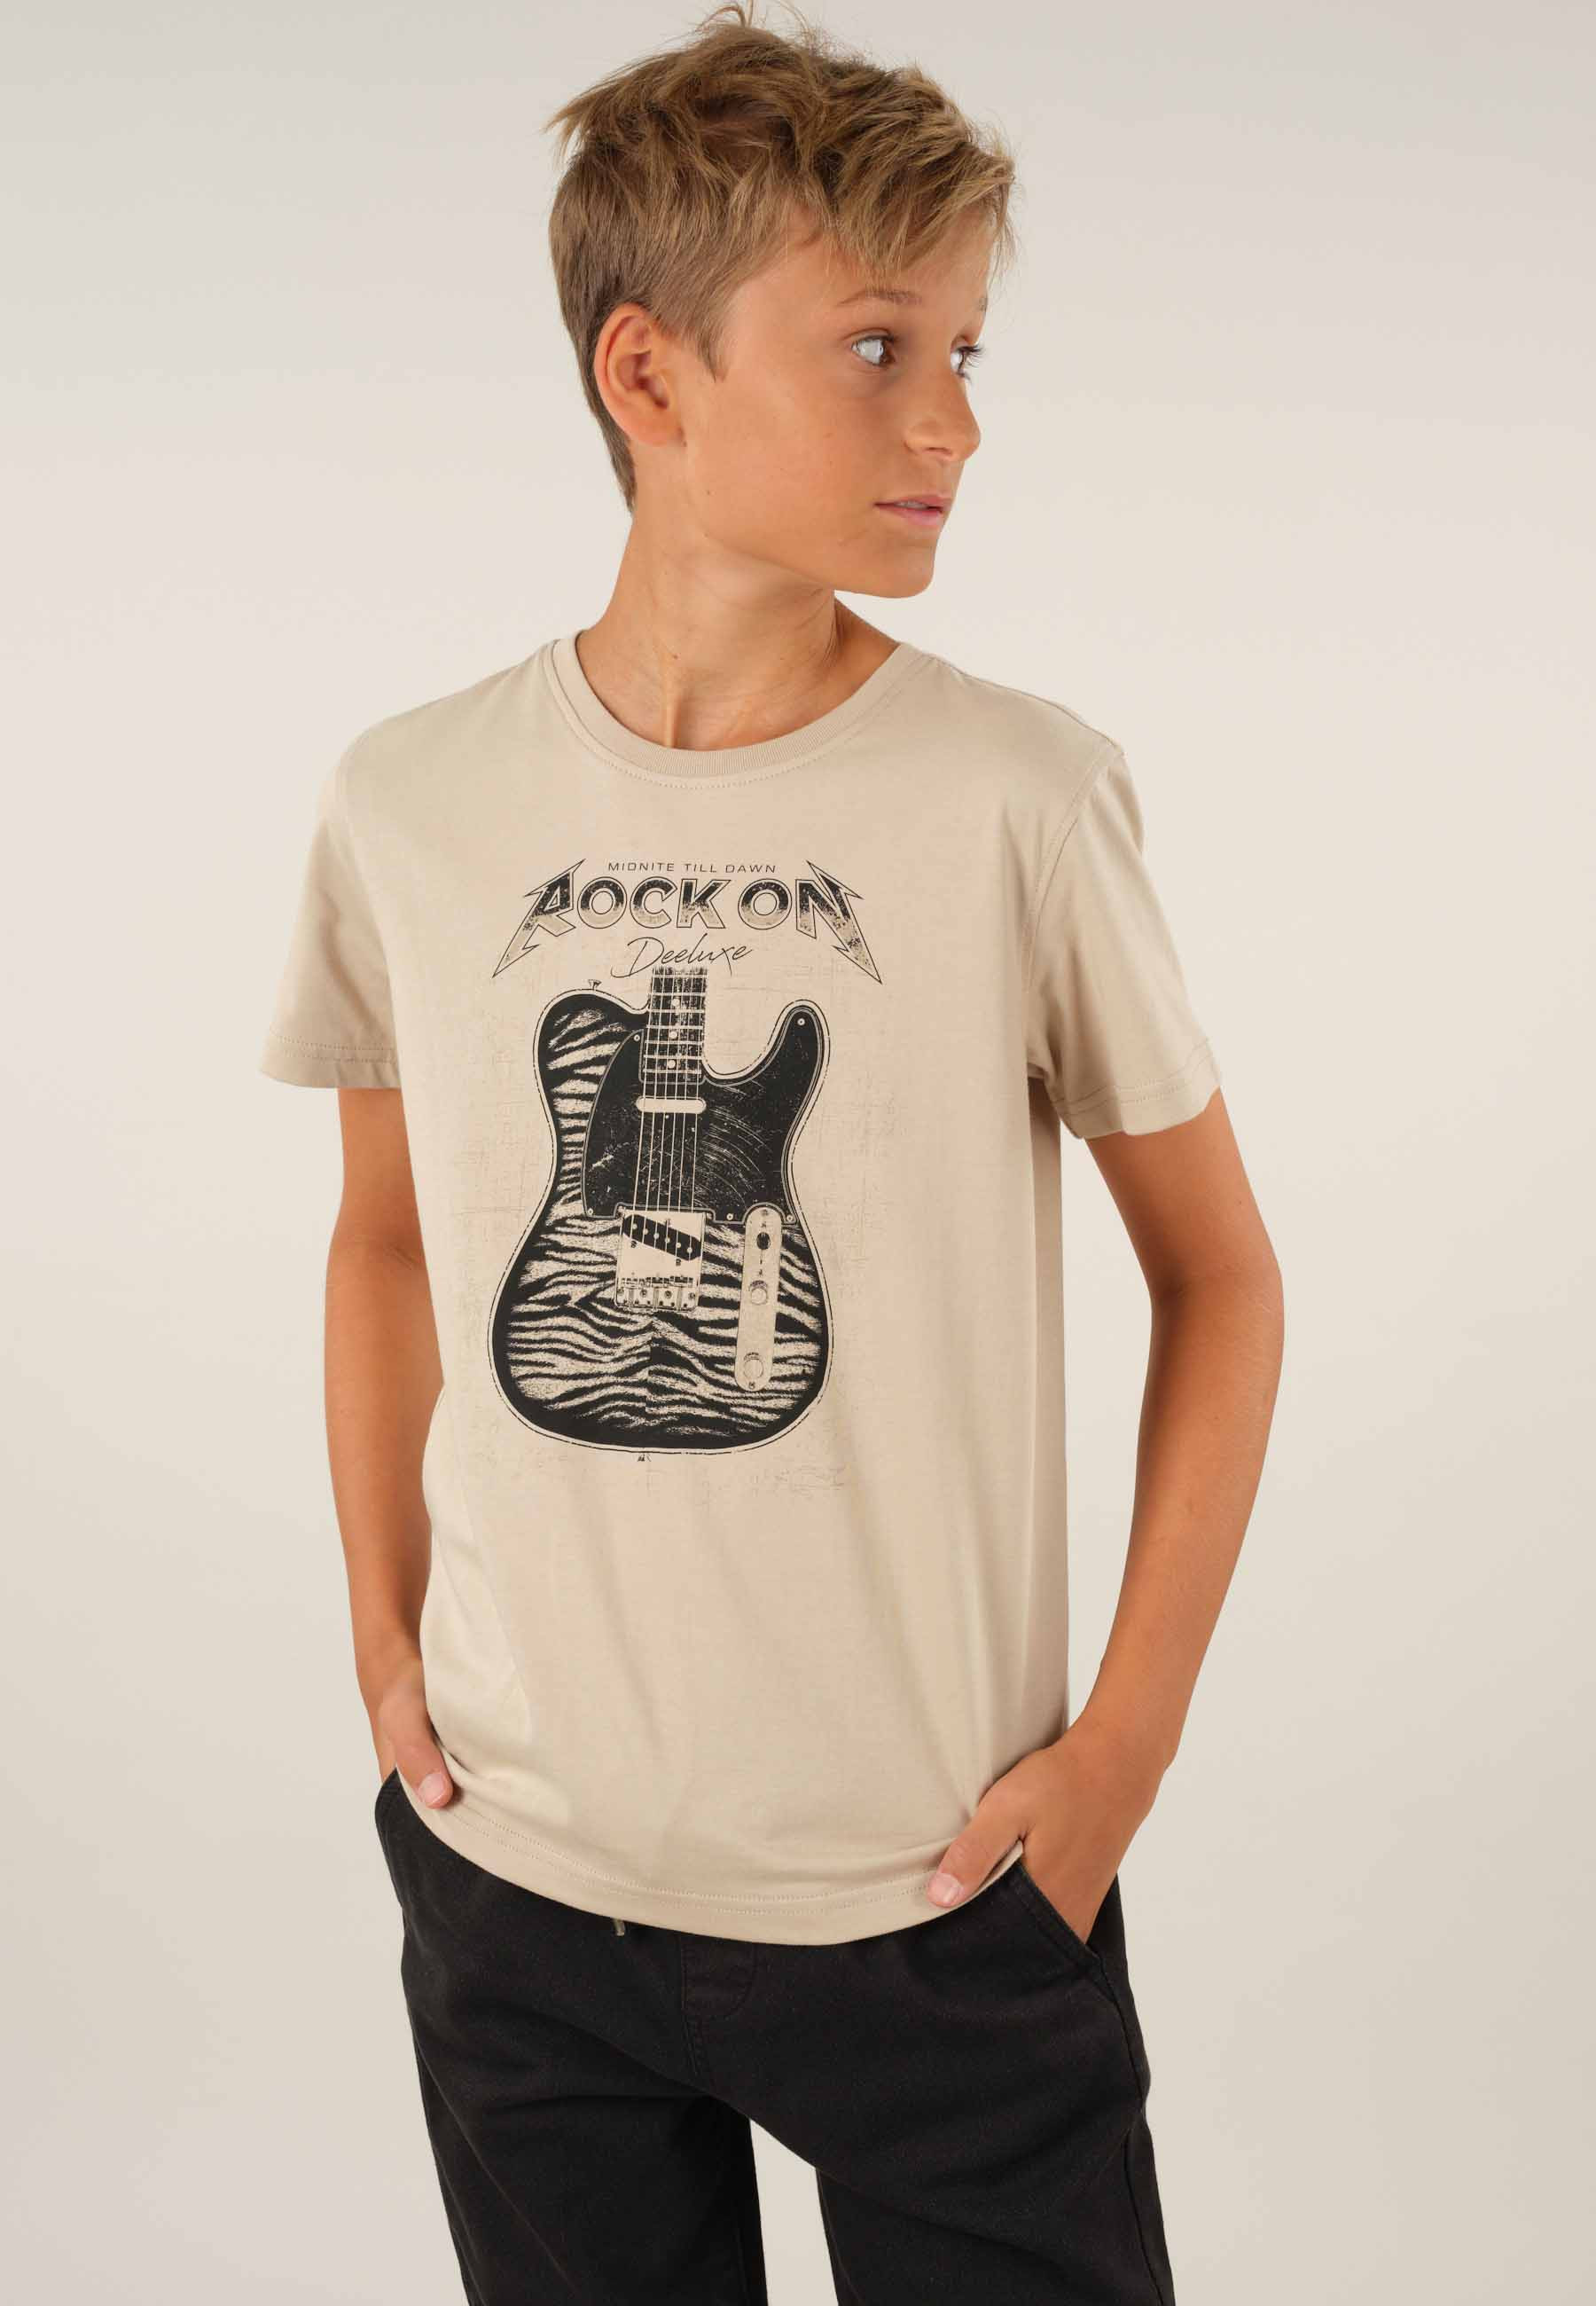 T-Shirt ROCKON